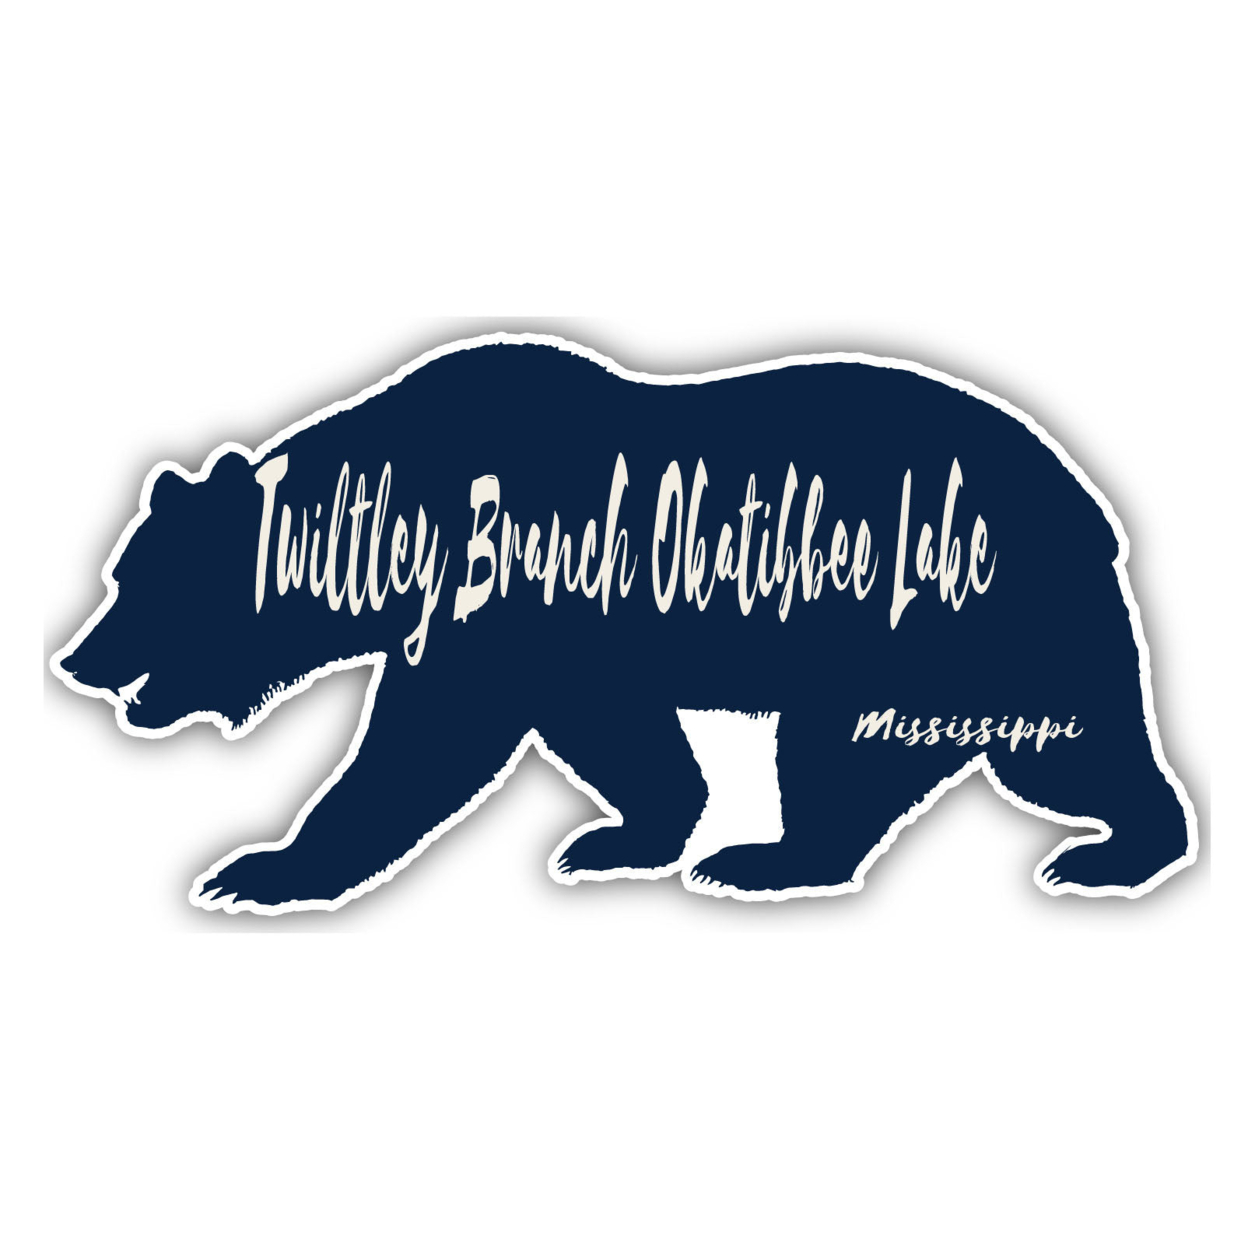 Twiltley Branch Okatibbee Lake Mississippi Souvenir Decorative Stickers (Choose Theme And Size) - Single Unit, 4-Inch, Bear